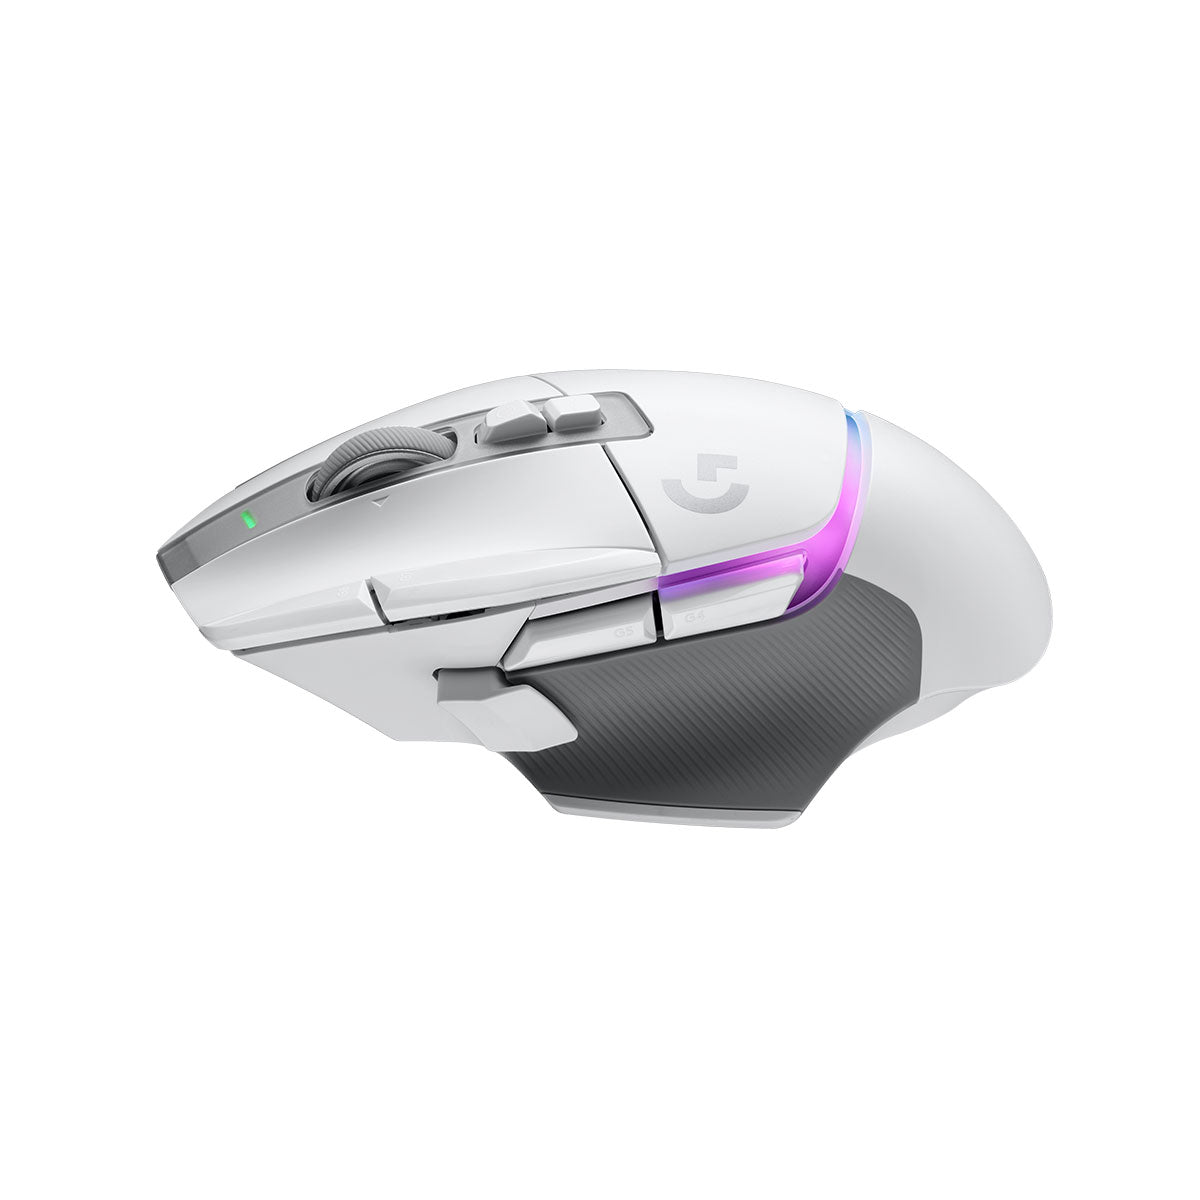 G502 X PLUS Wireless Gaming Mice